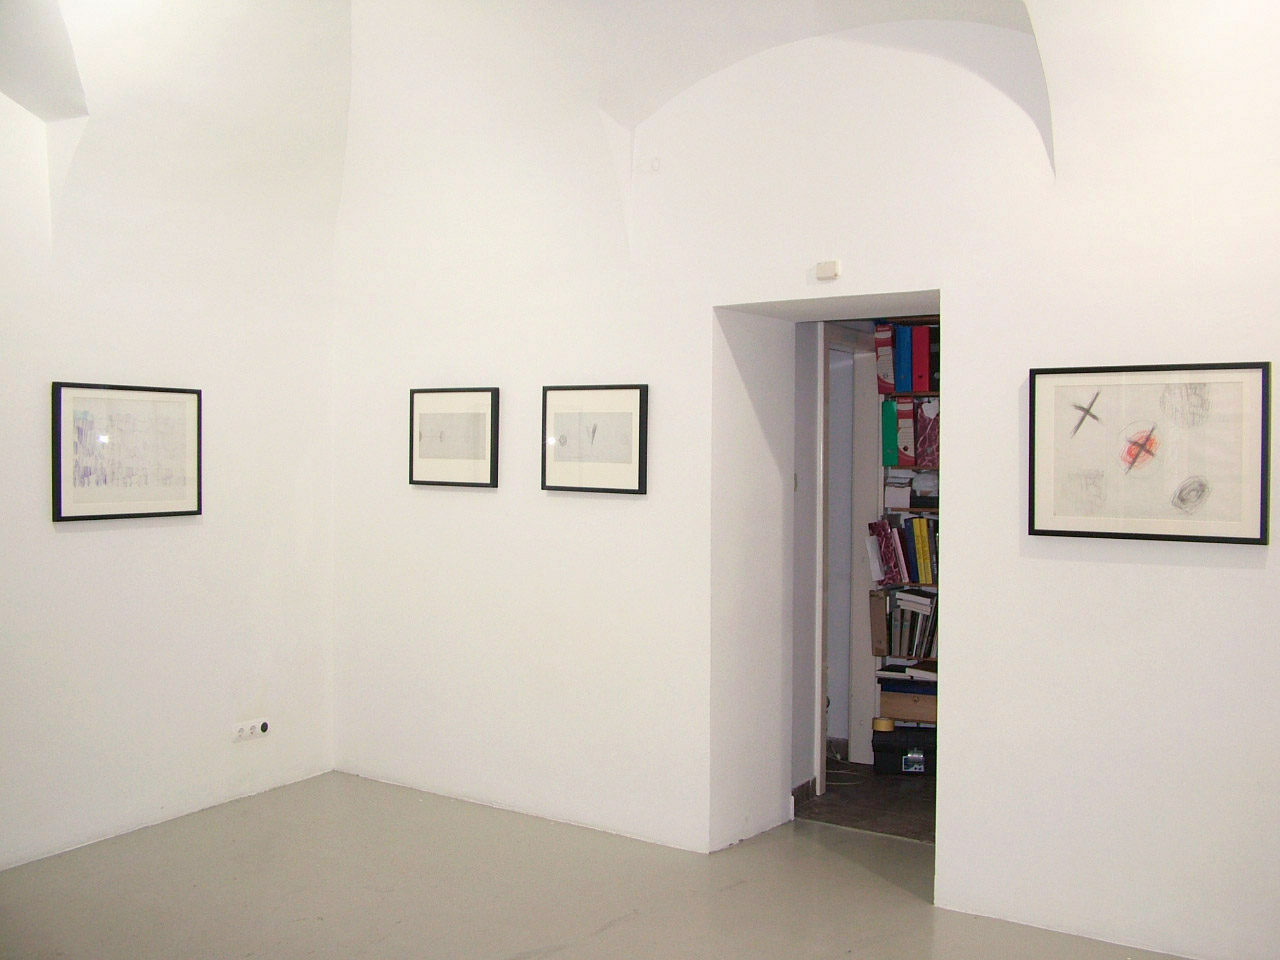 Installation view with works of Miklós ERDÉLY, Kisterem, 2011